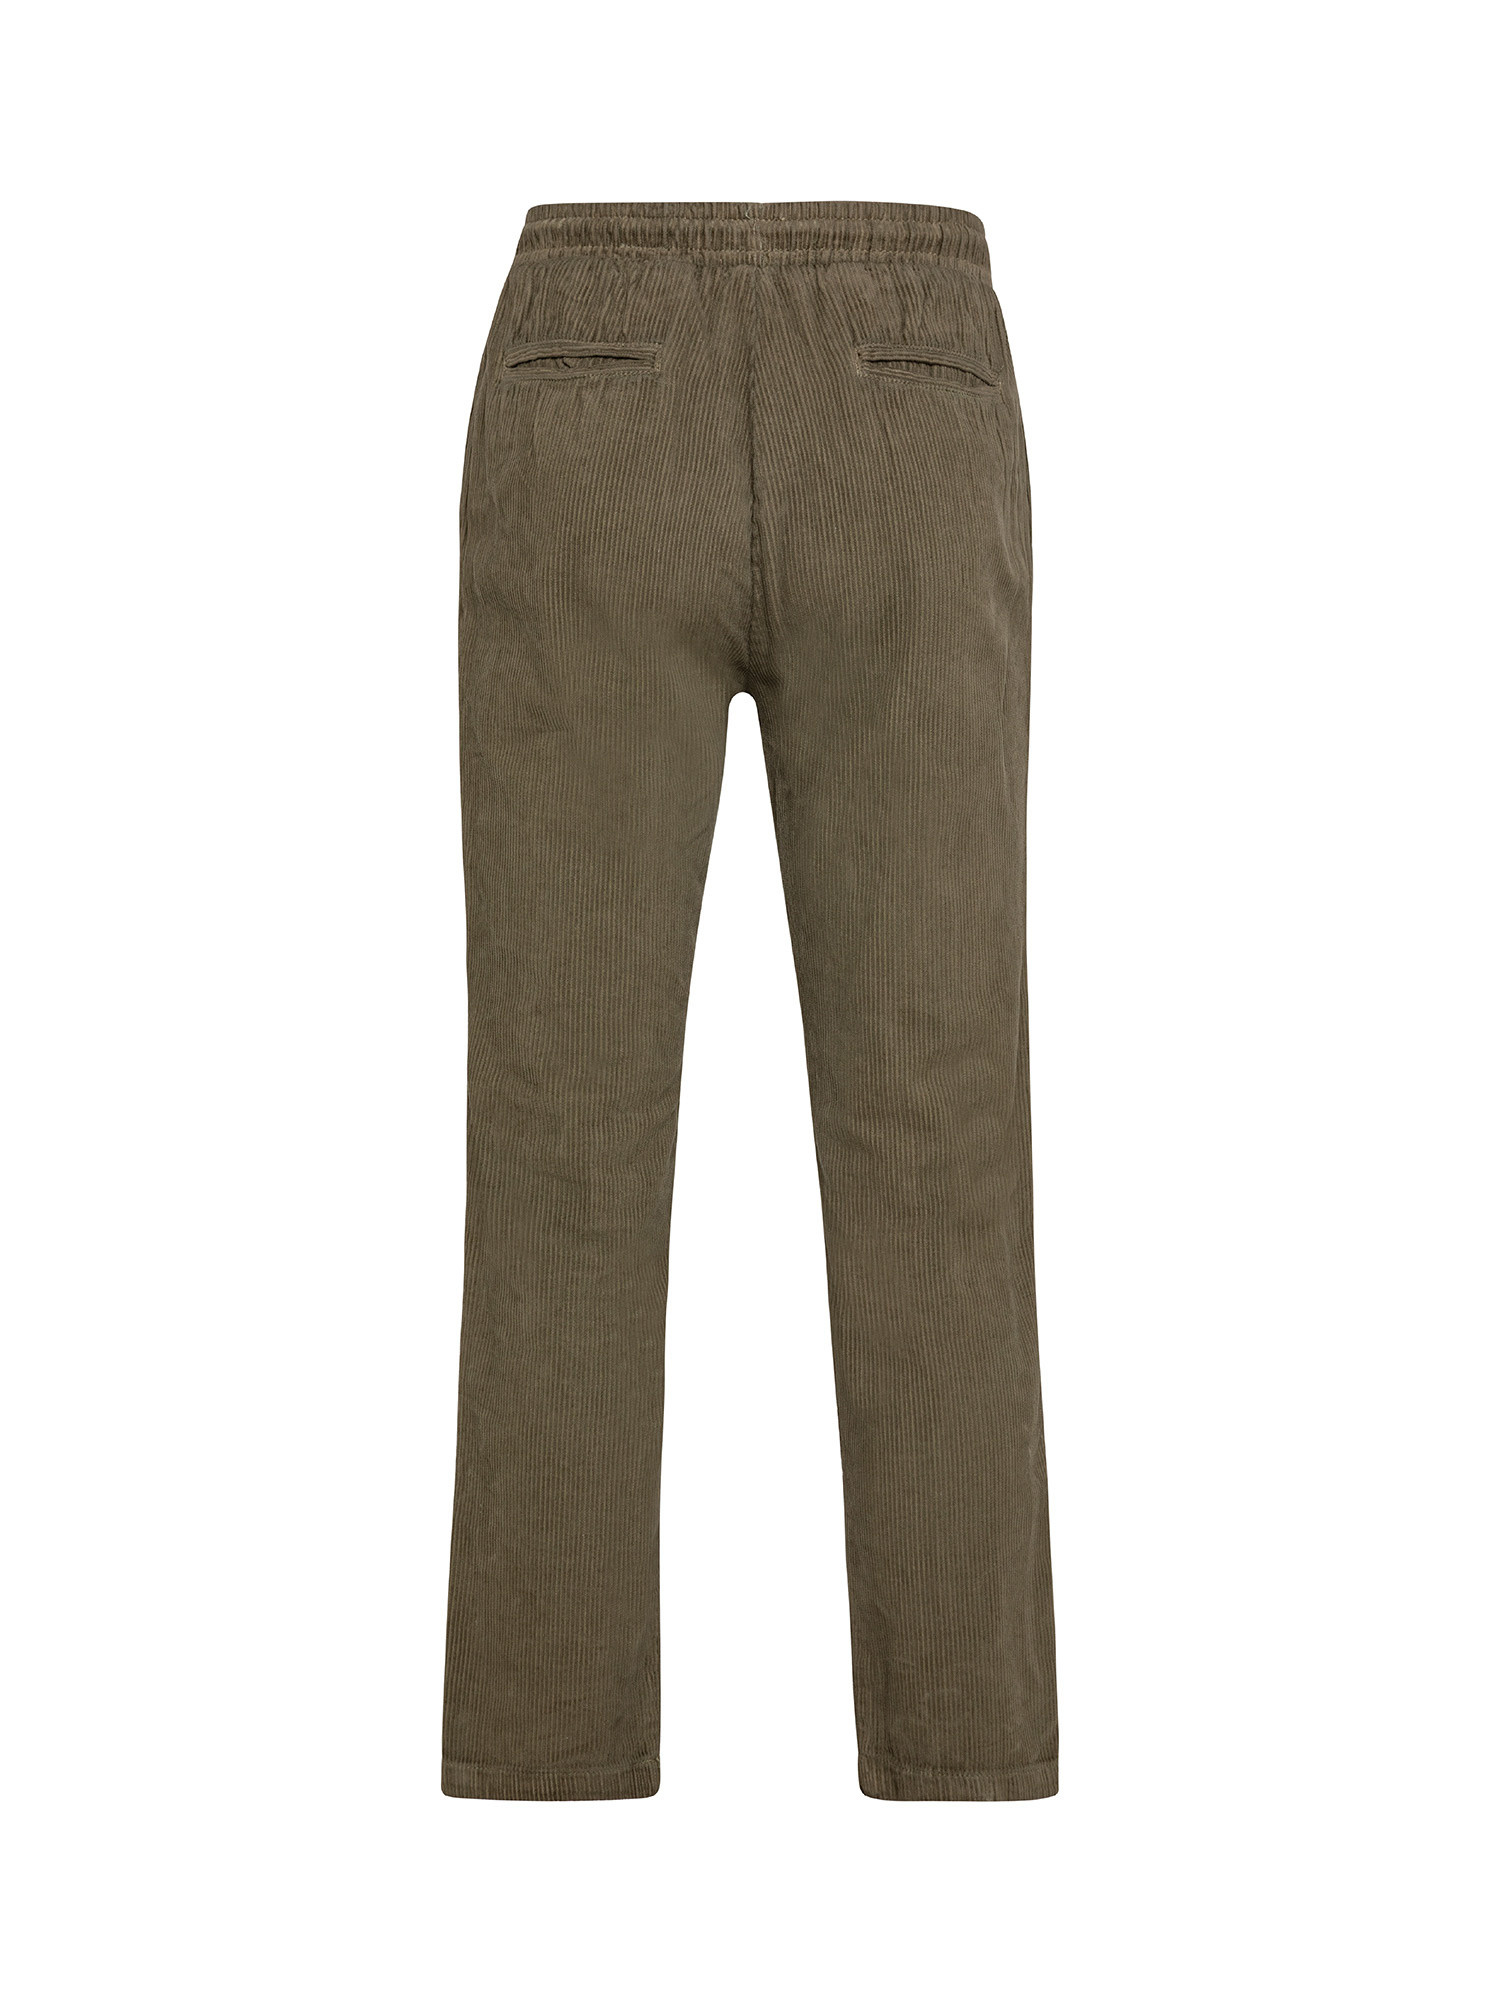 JCT - Velvet trousers, Olive Green, large image number 1